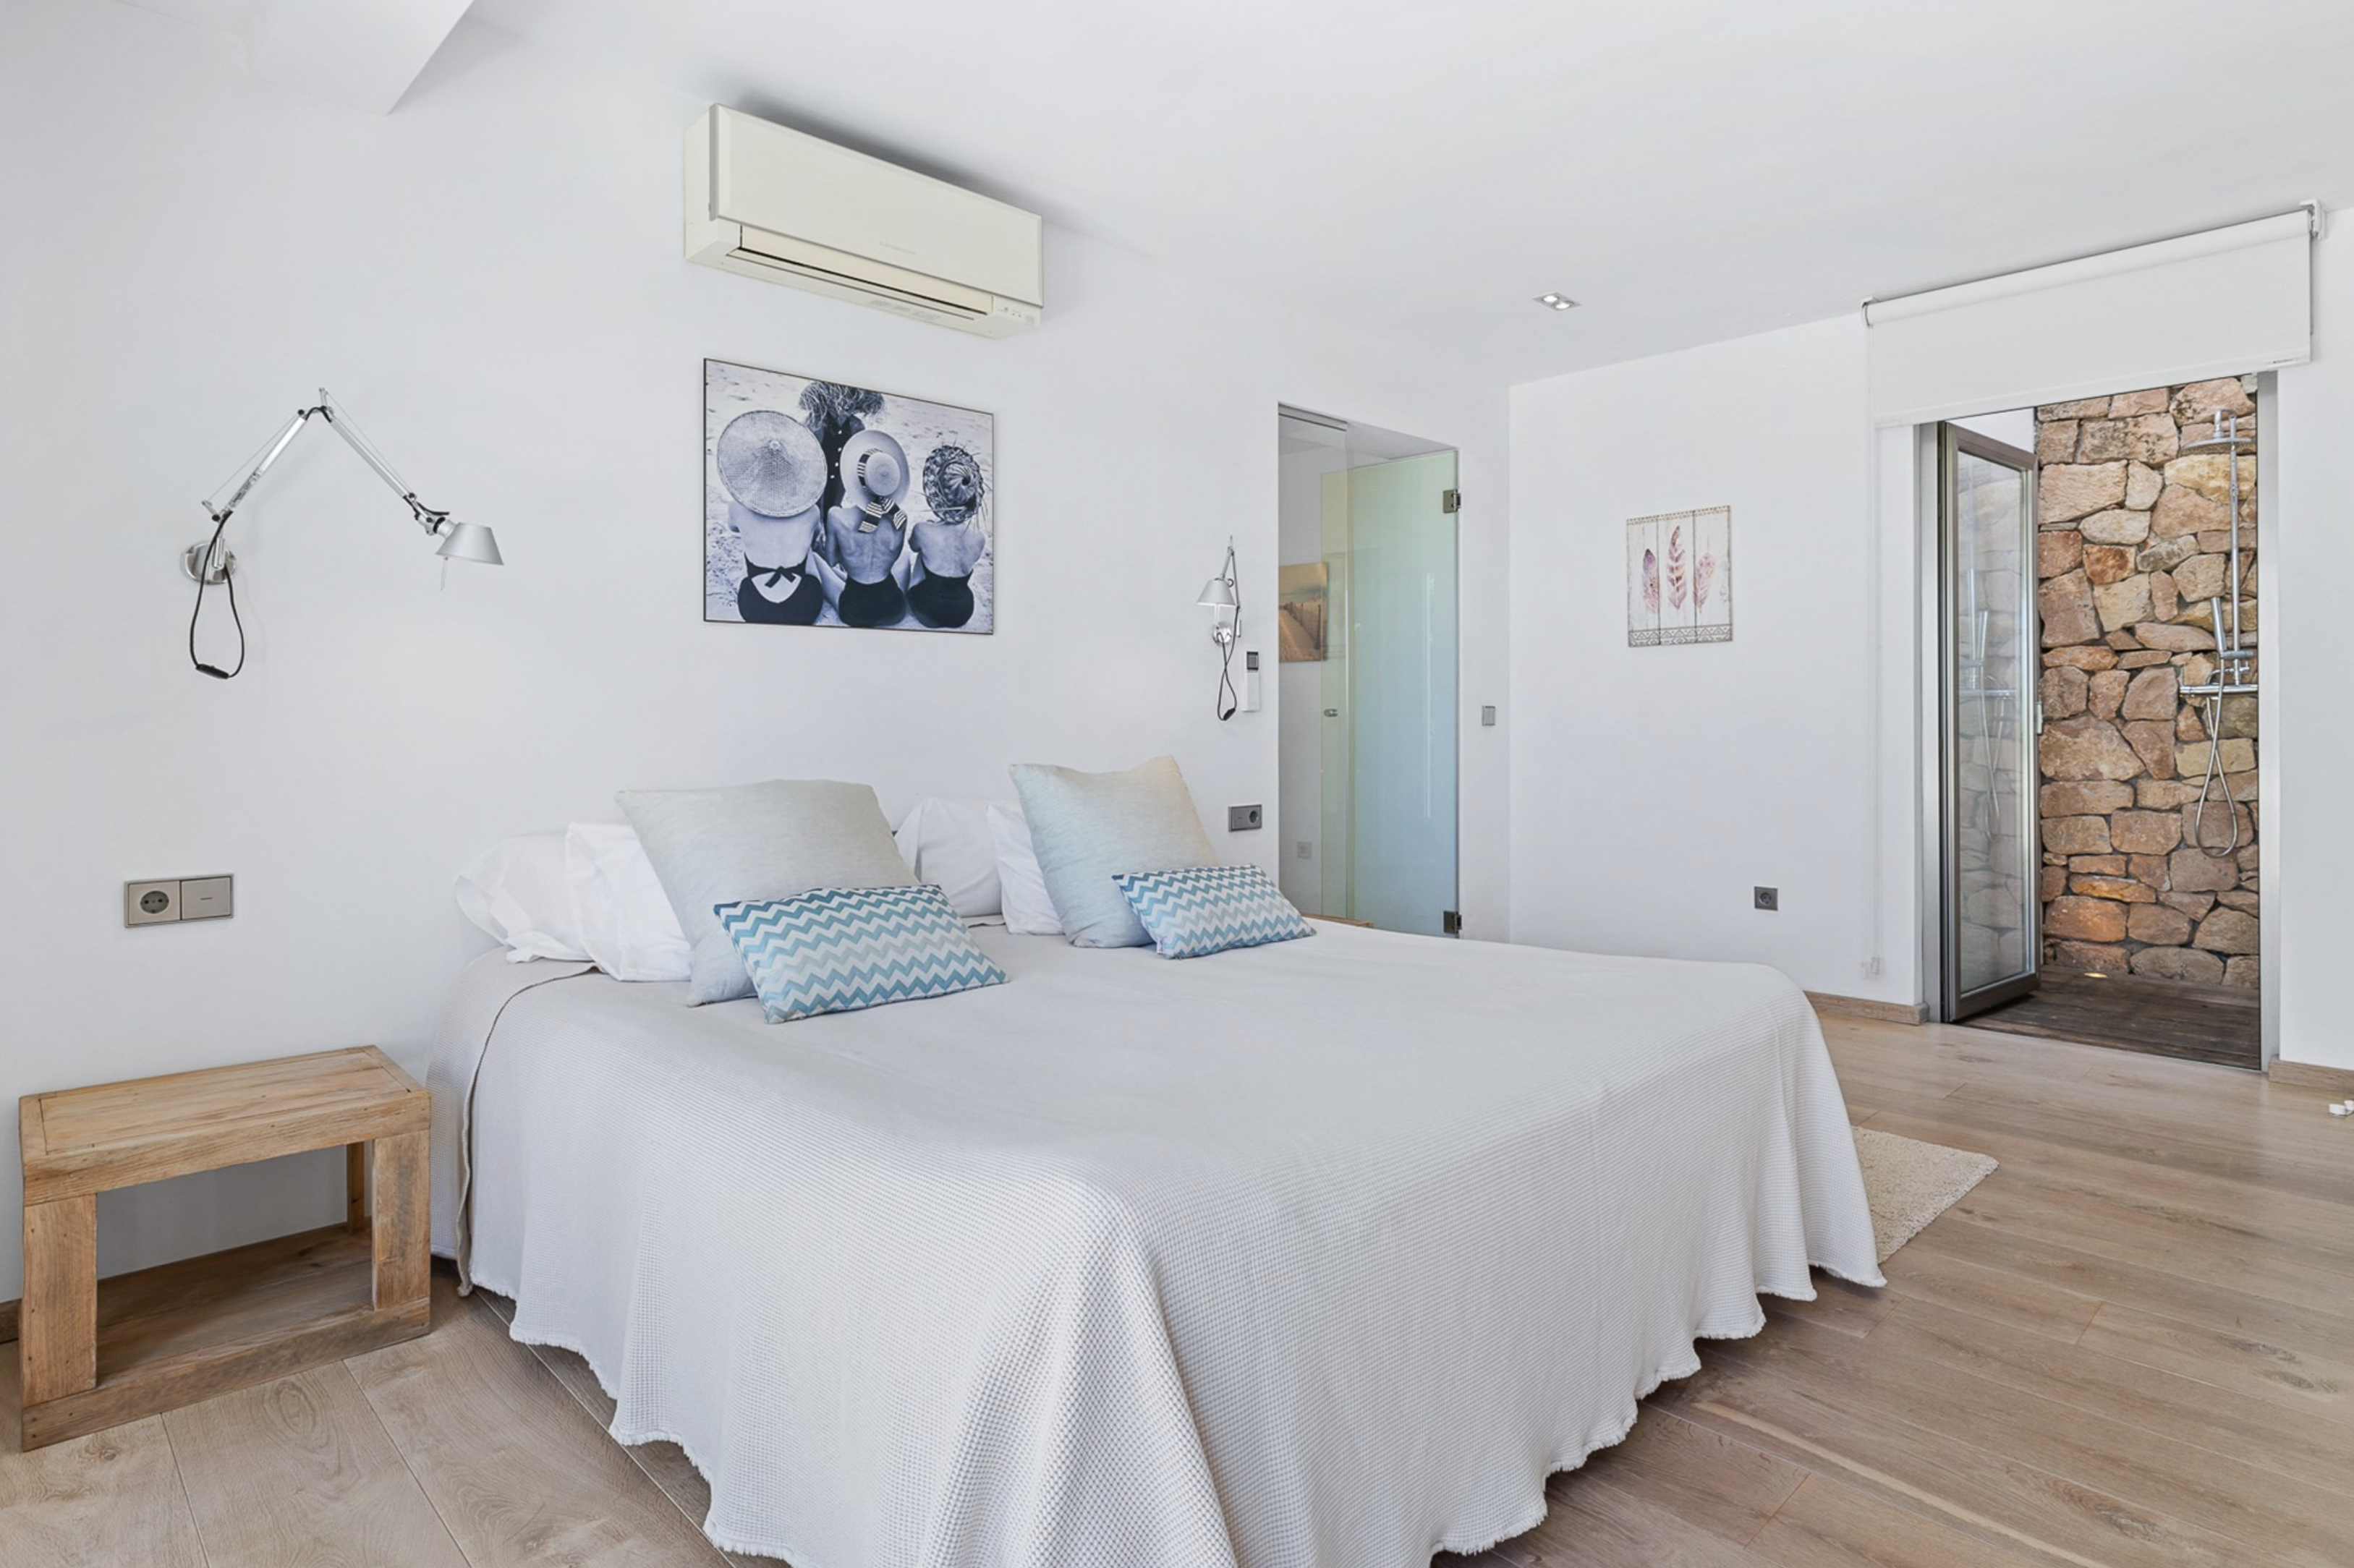 Resa Estates Ivy Cala Tarida Ibiza  luxe woning villa for rent te huur house bedroom 11.png